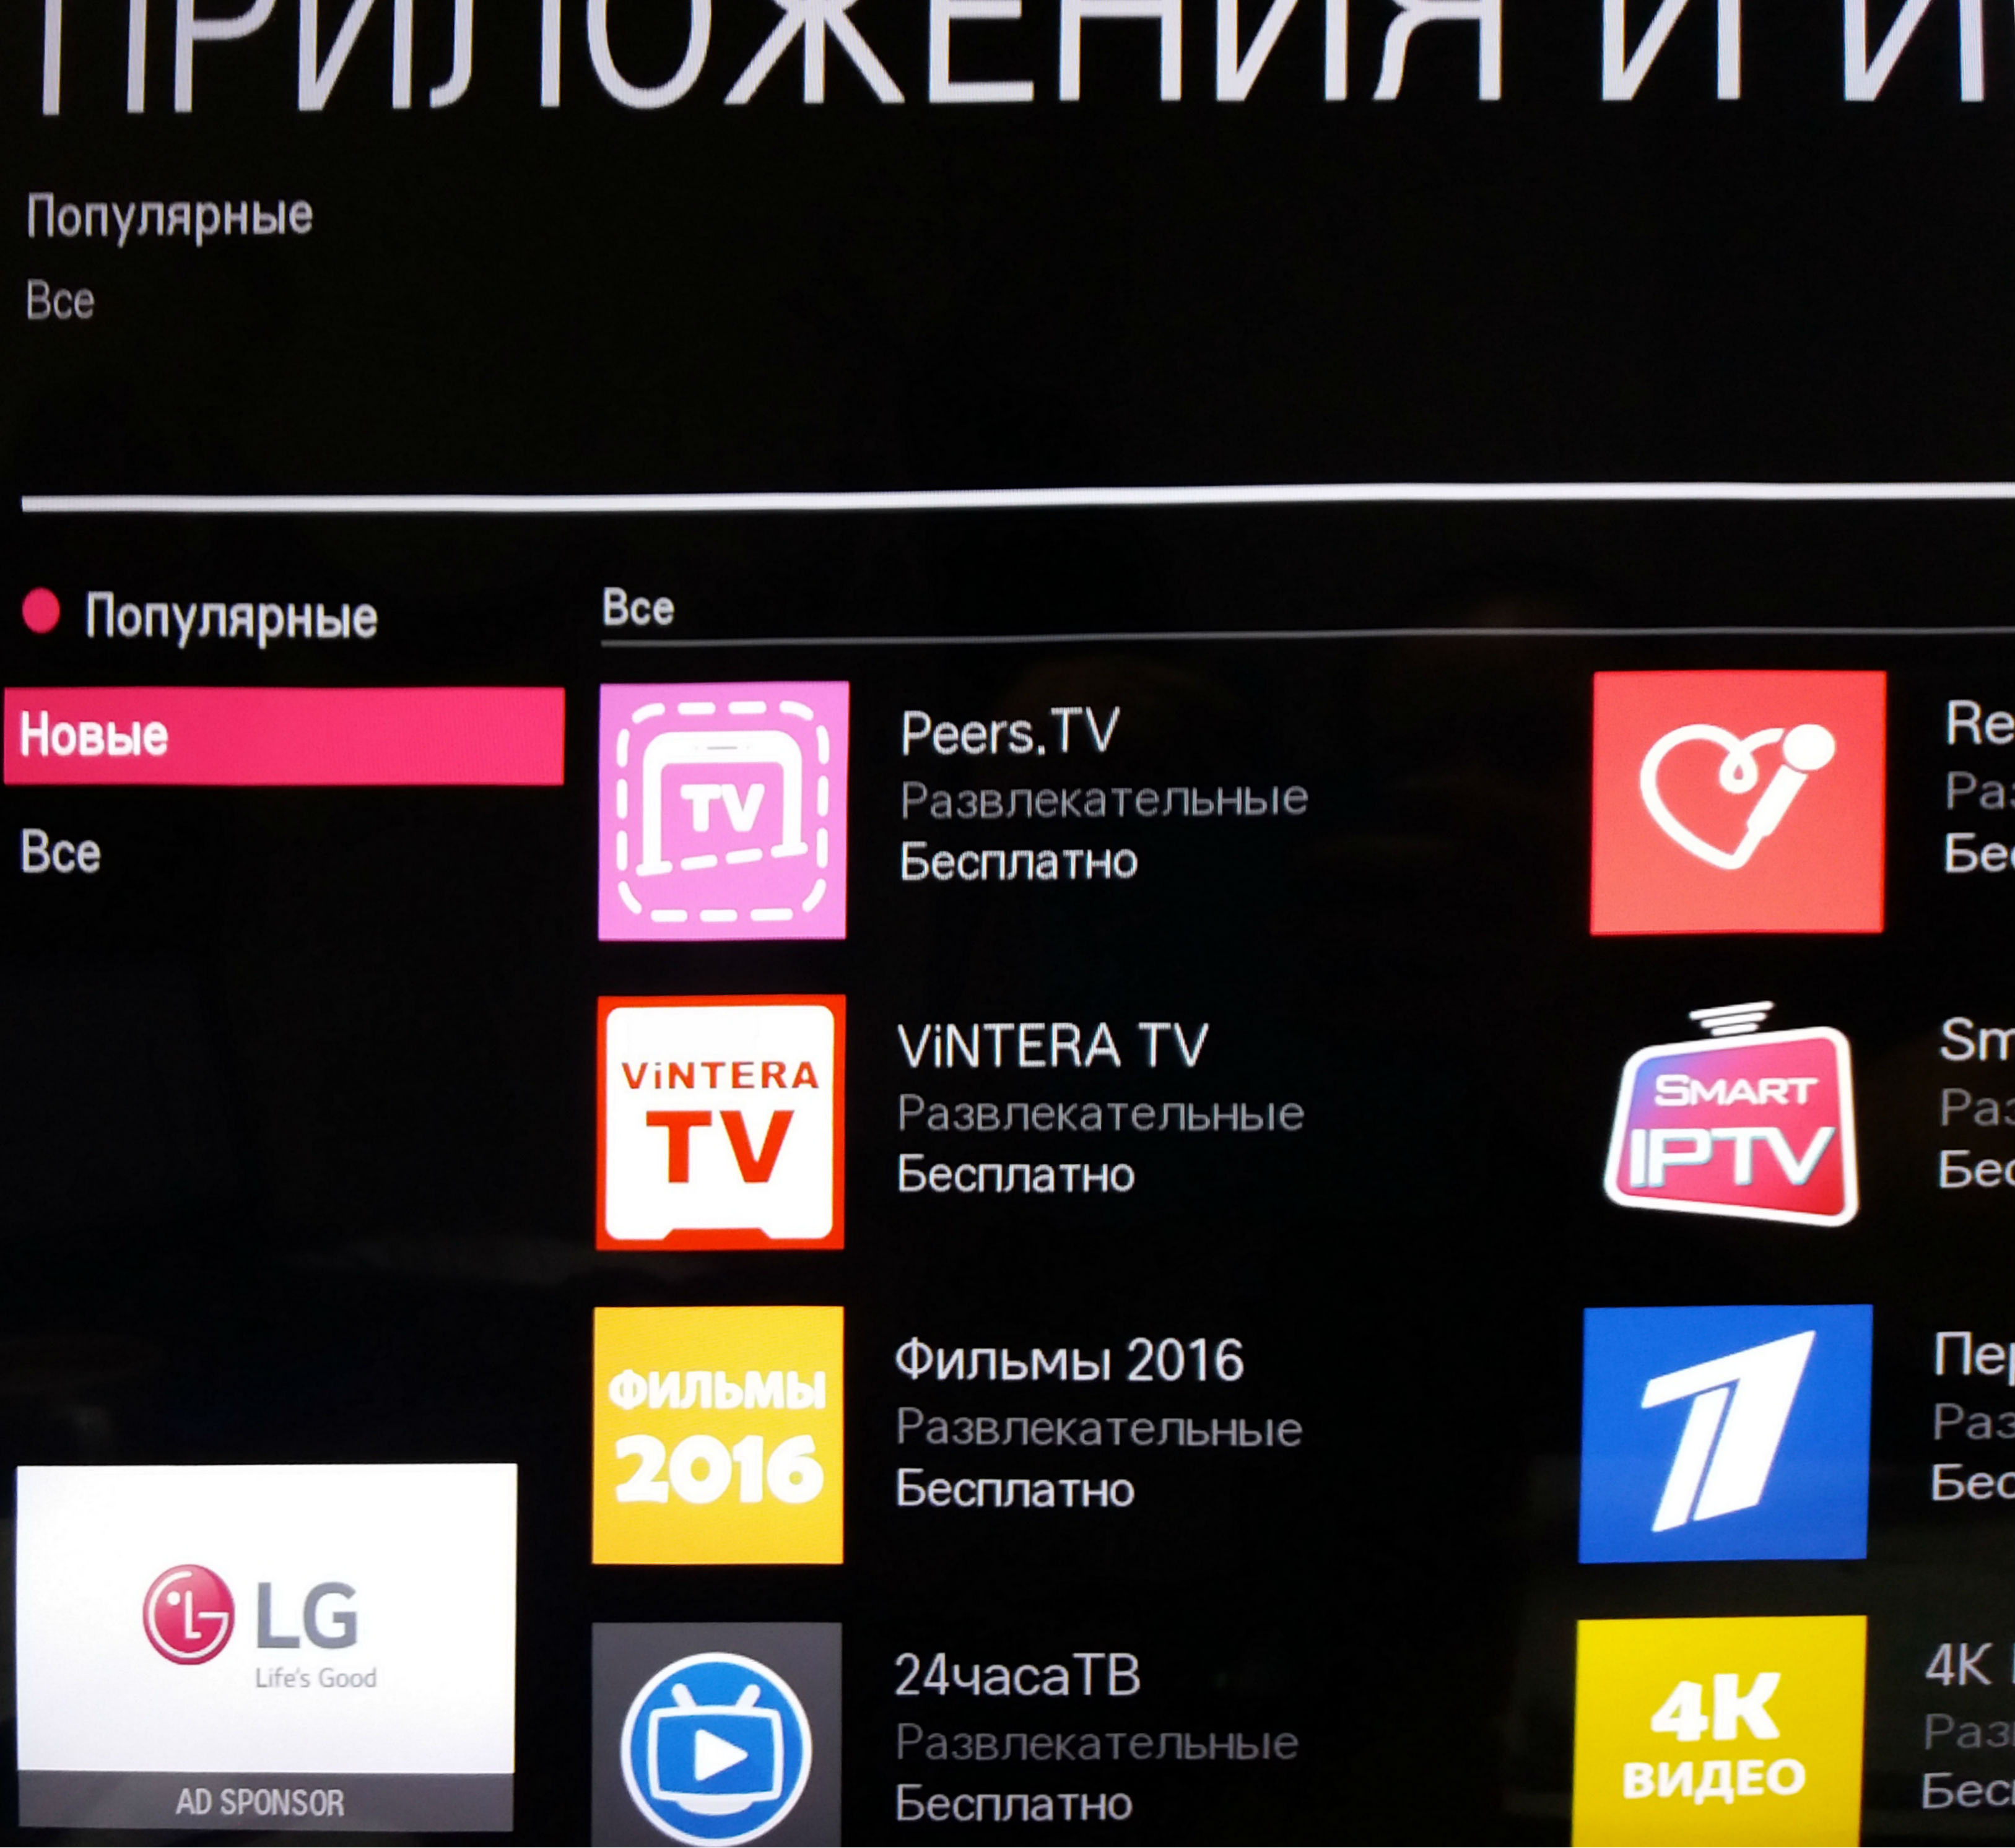 Приложение для просмотра телевизора на смарт. LG Smart Store TV приложения. Приложения для телевизора LG Smart TV. Приложение IPTV для LG Smart TV. Магазин приложений на телевизоре LG.